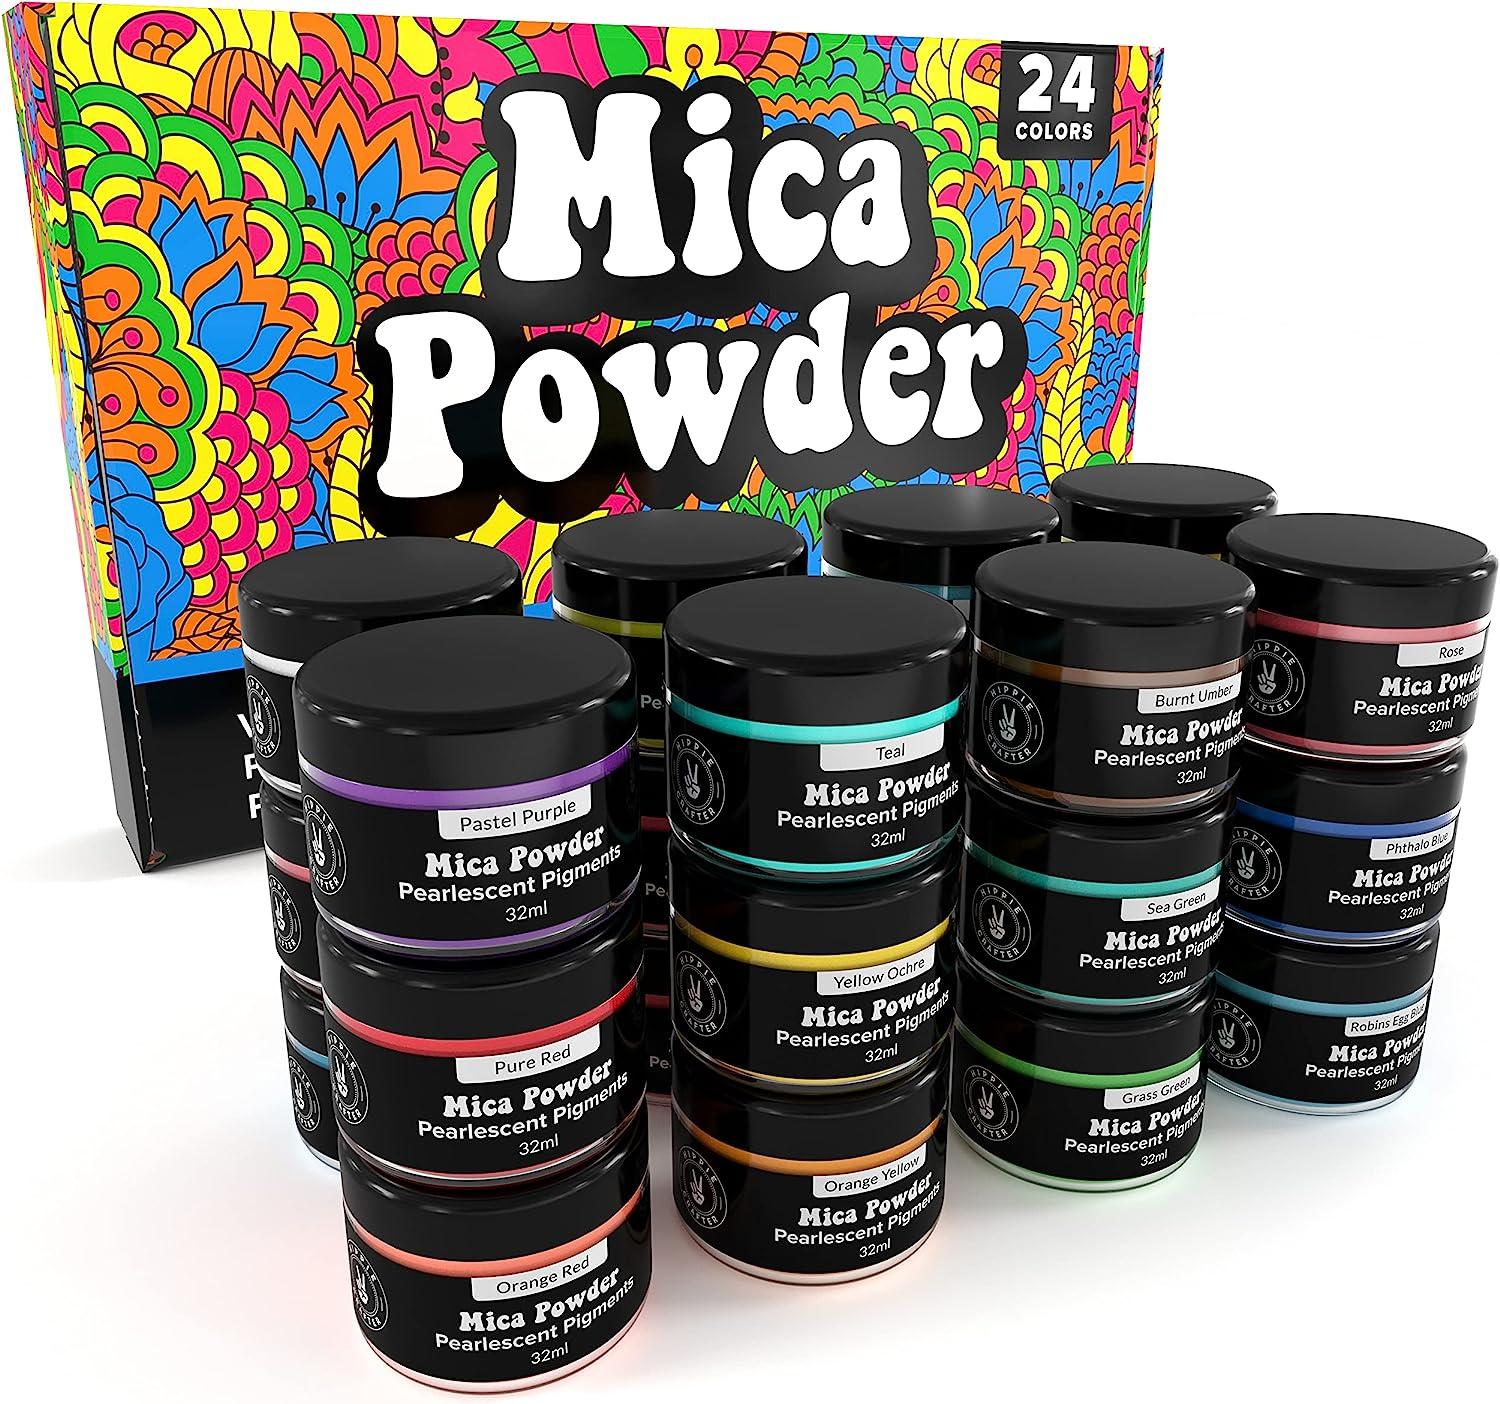 Sliver Black Mica Pigment Pearl Powder DIY Mineral Dye Colorant